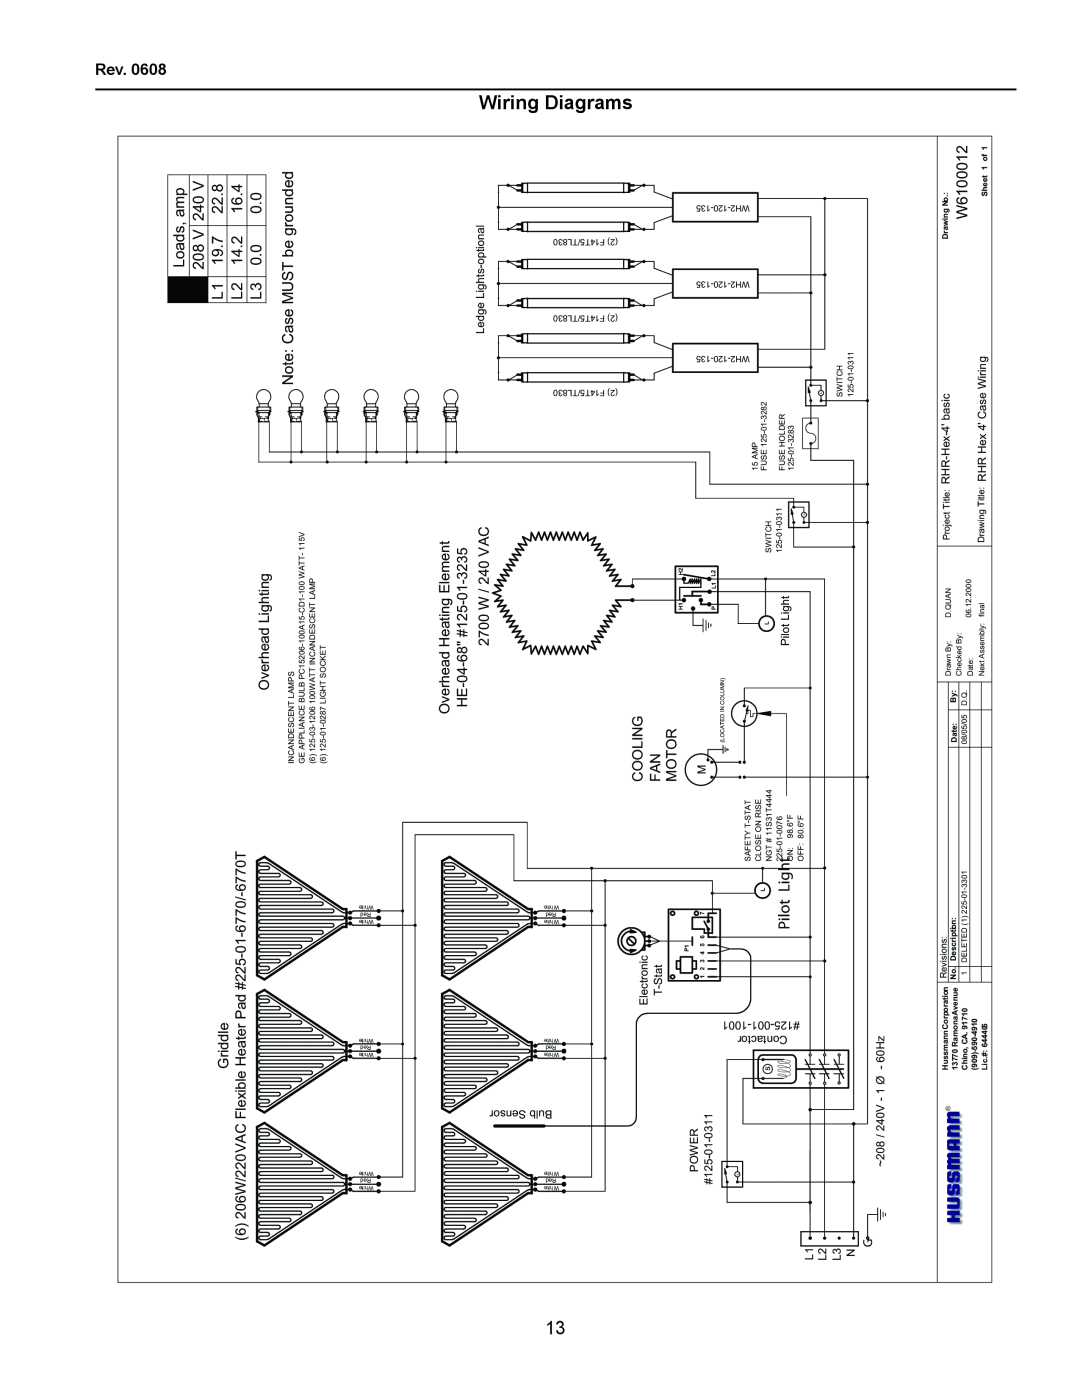 hussman RHR-SQ, rhr-hex, RHR2-HEX, RHR 1/2 HEX operation manual Wiring Diagrams, Rev 